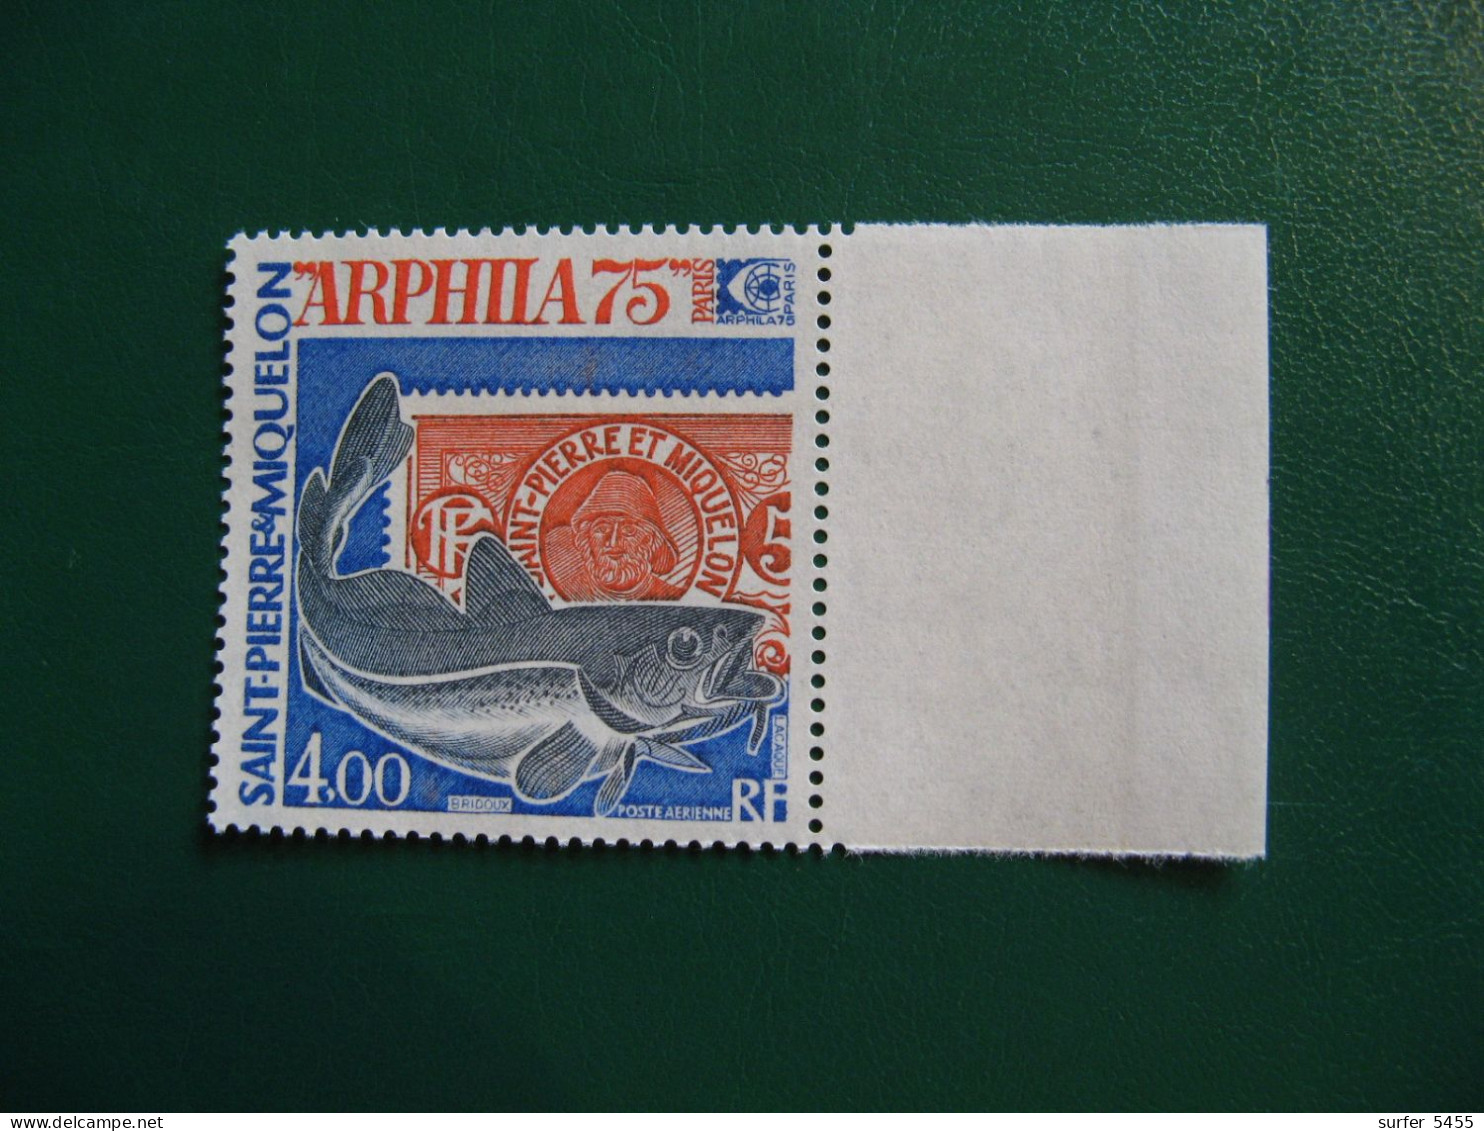 SAINT PIERRE ET MIQUELON YVERT POSTE AERIENNE N° 60 NEUF** LUXE - MNH -  COTE 25,20 EUROS - Unused Stamps